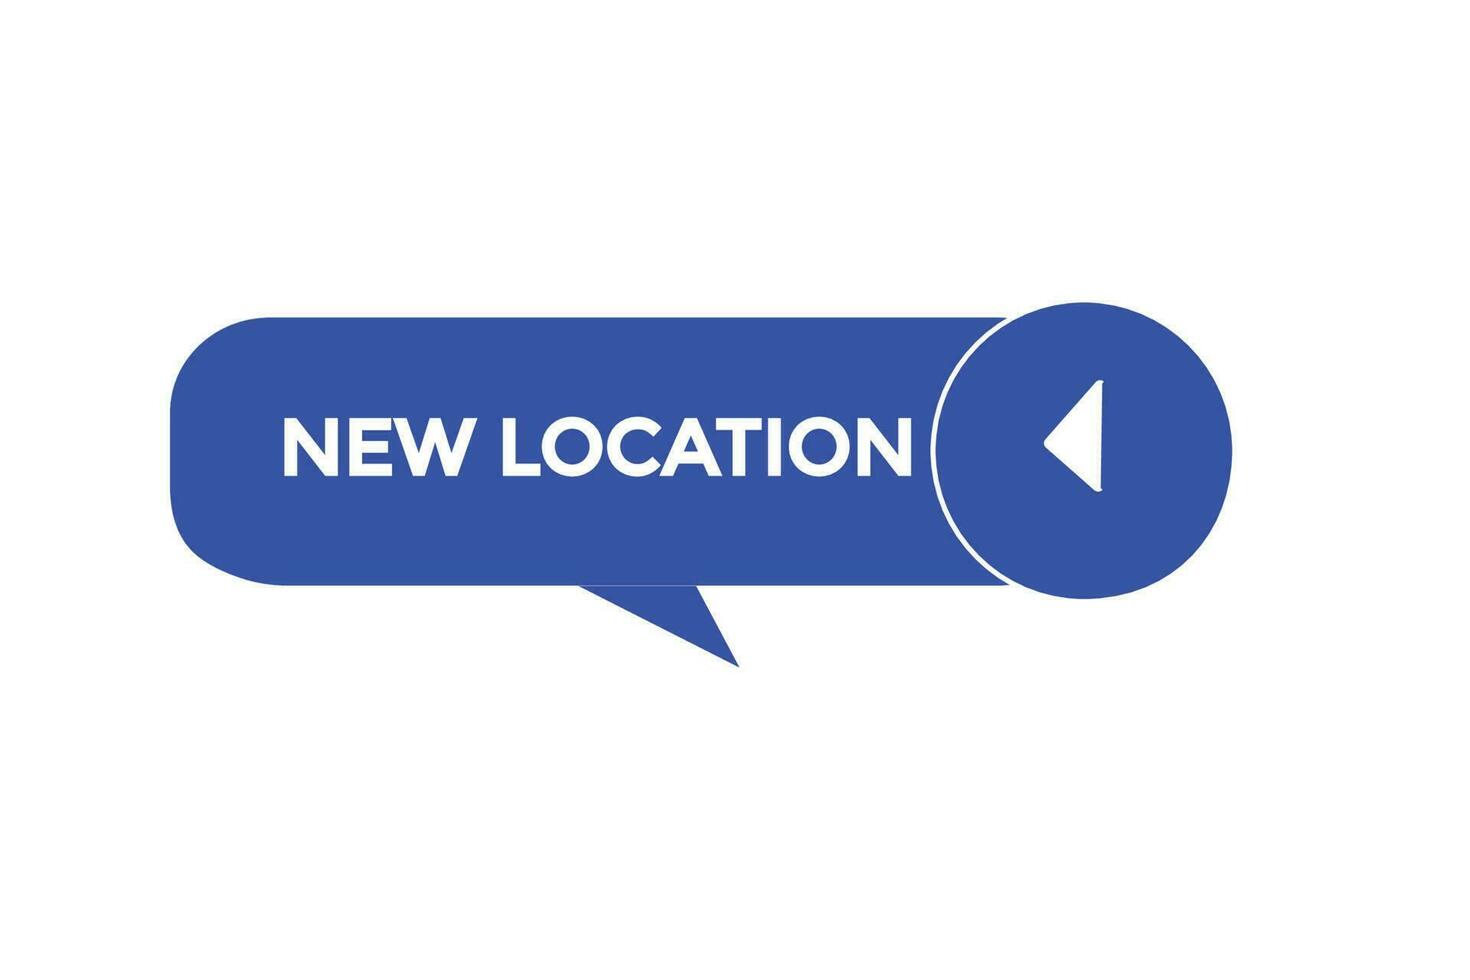 new location vectors, sign,lavel bubble speech new location vector